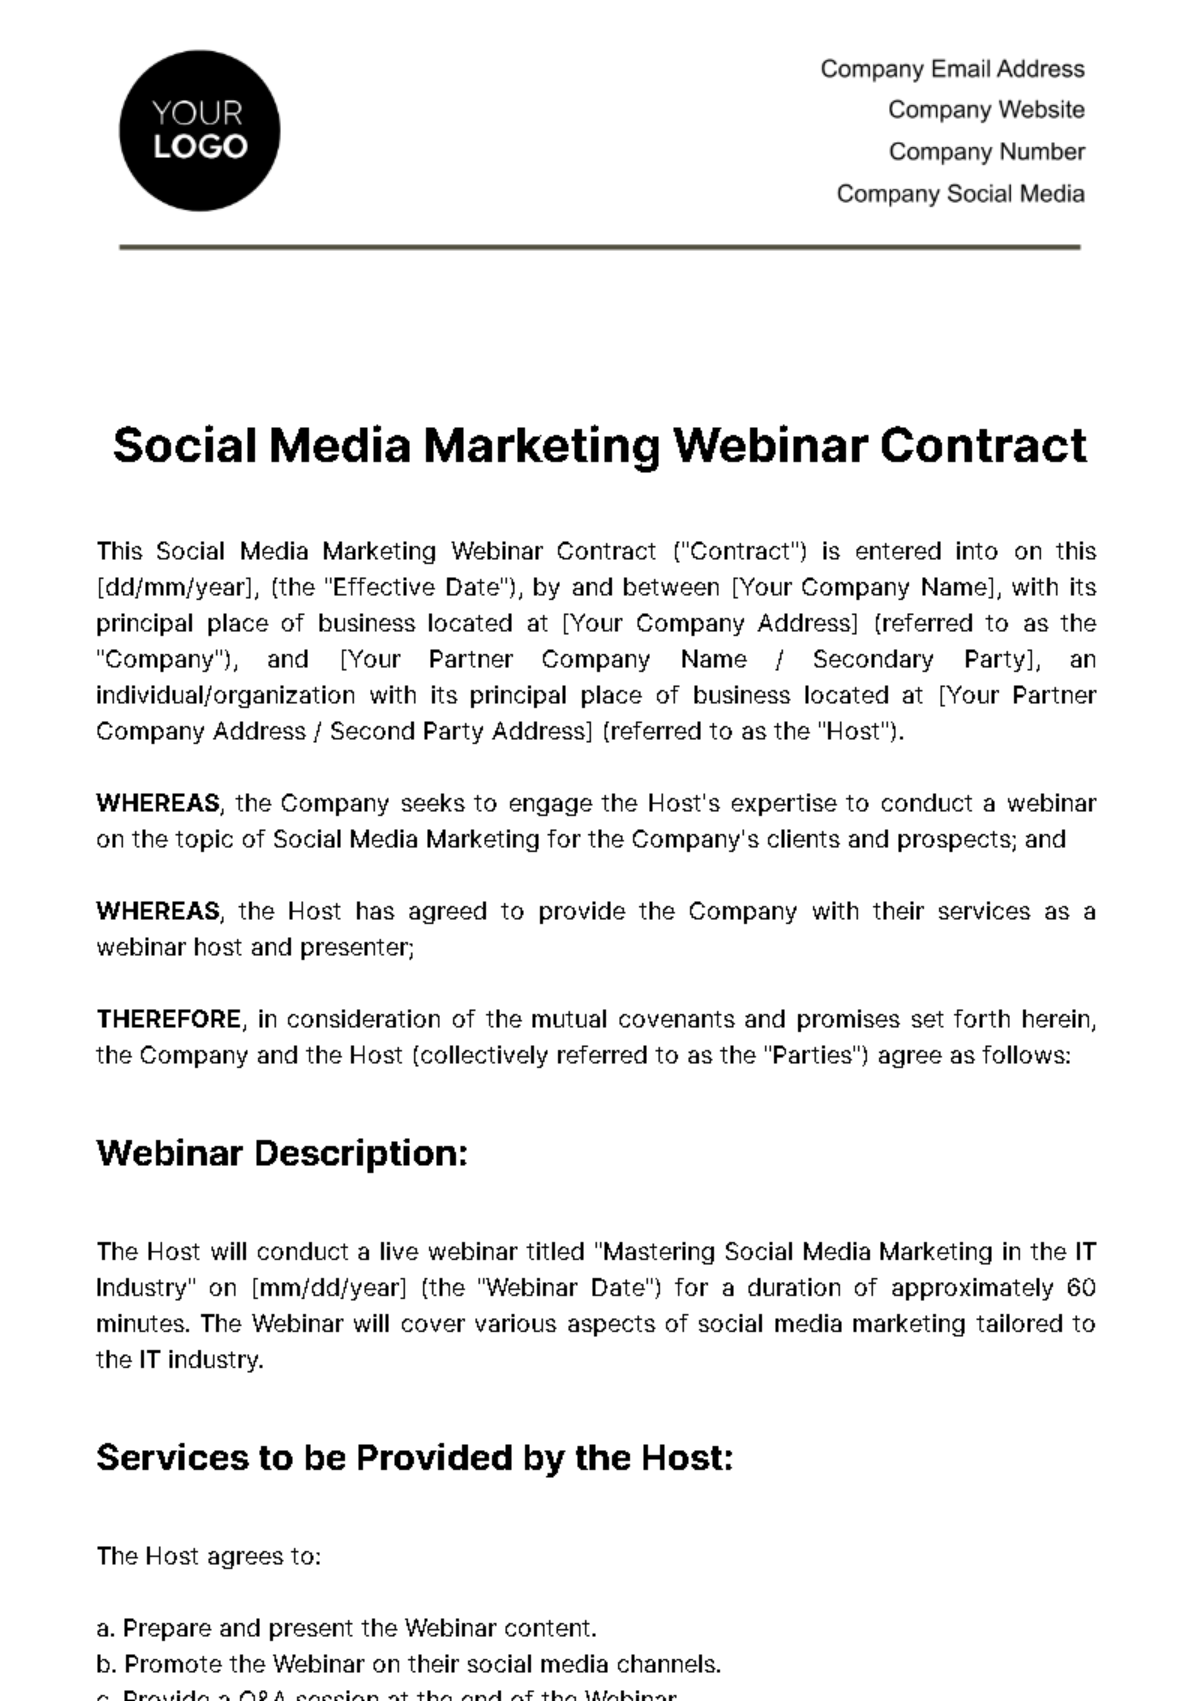 Free Social Media Marketing Webinar Contract Template